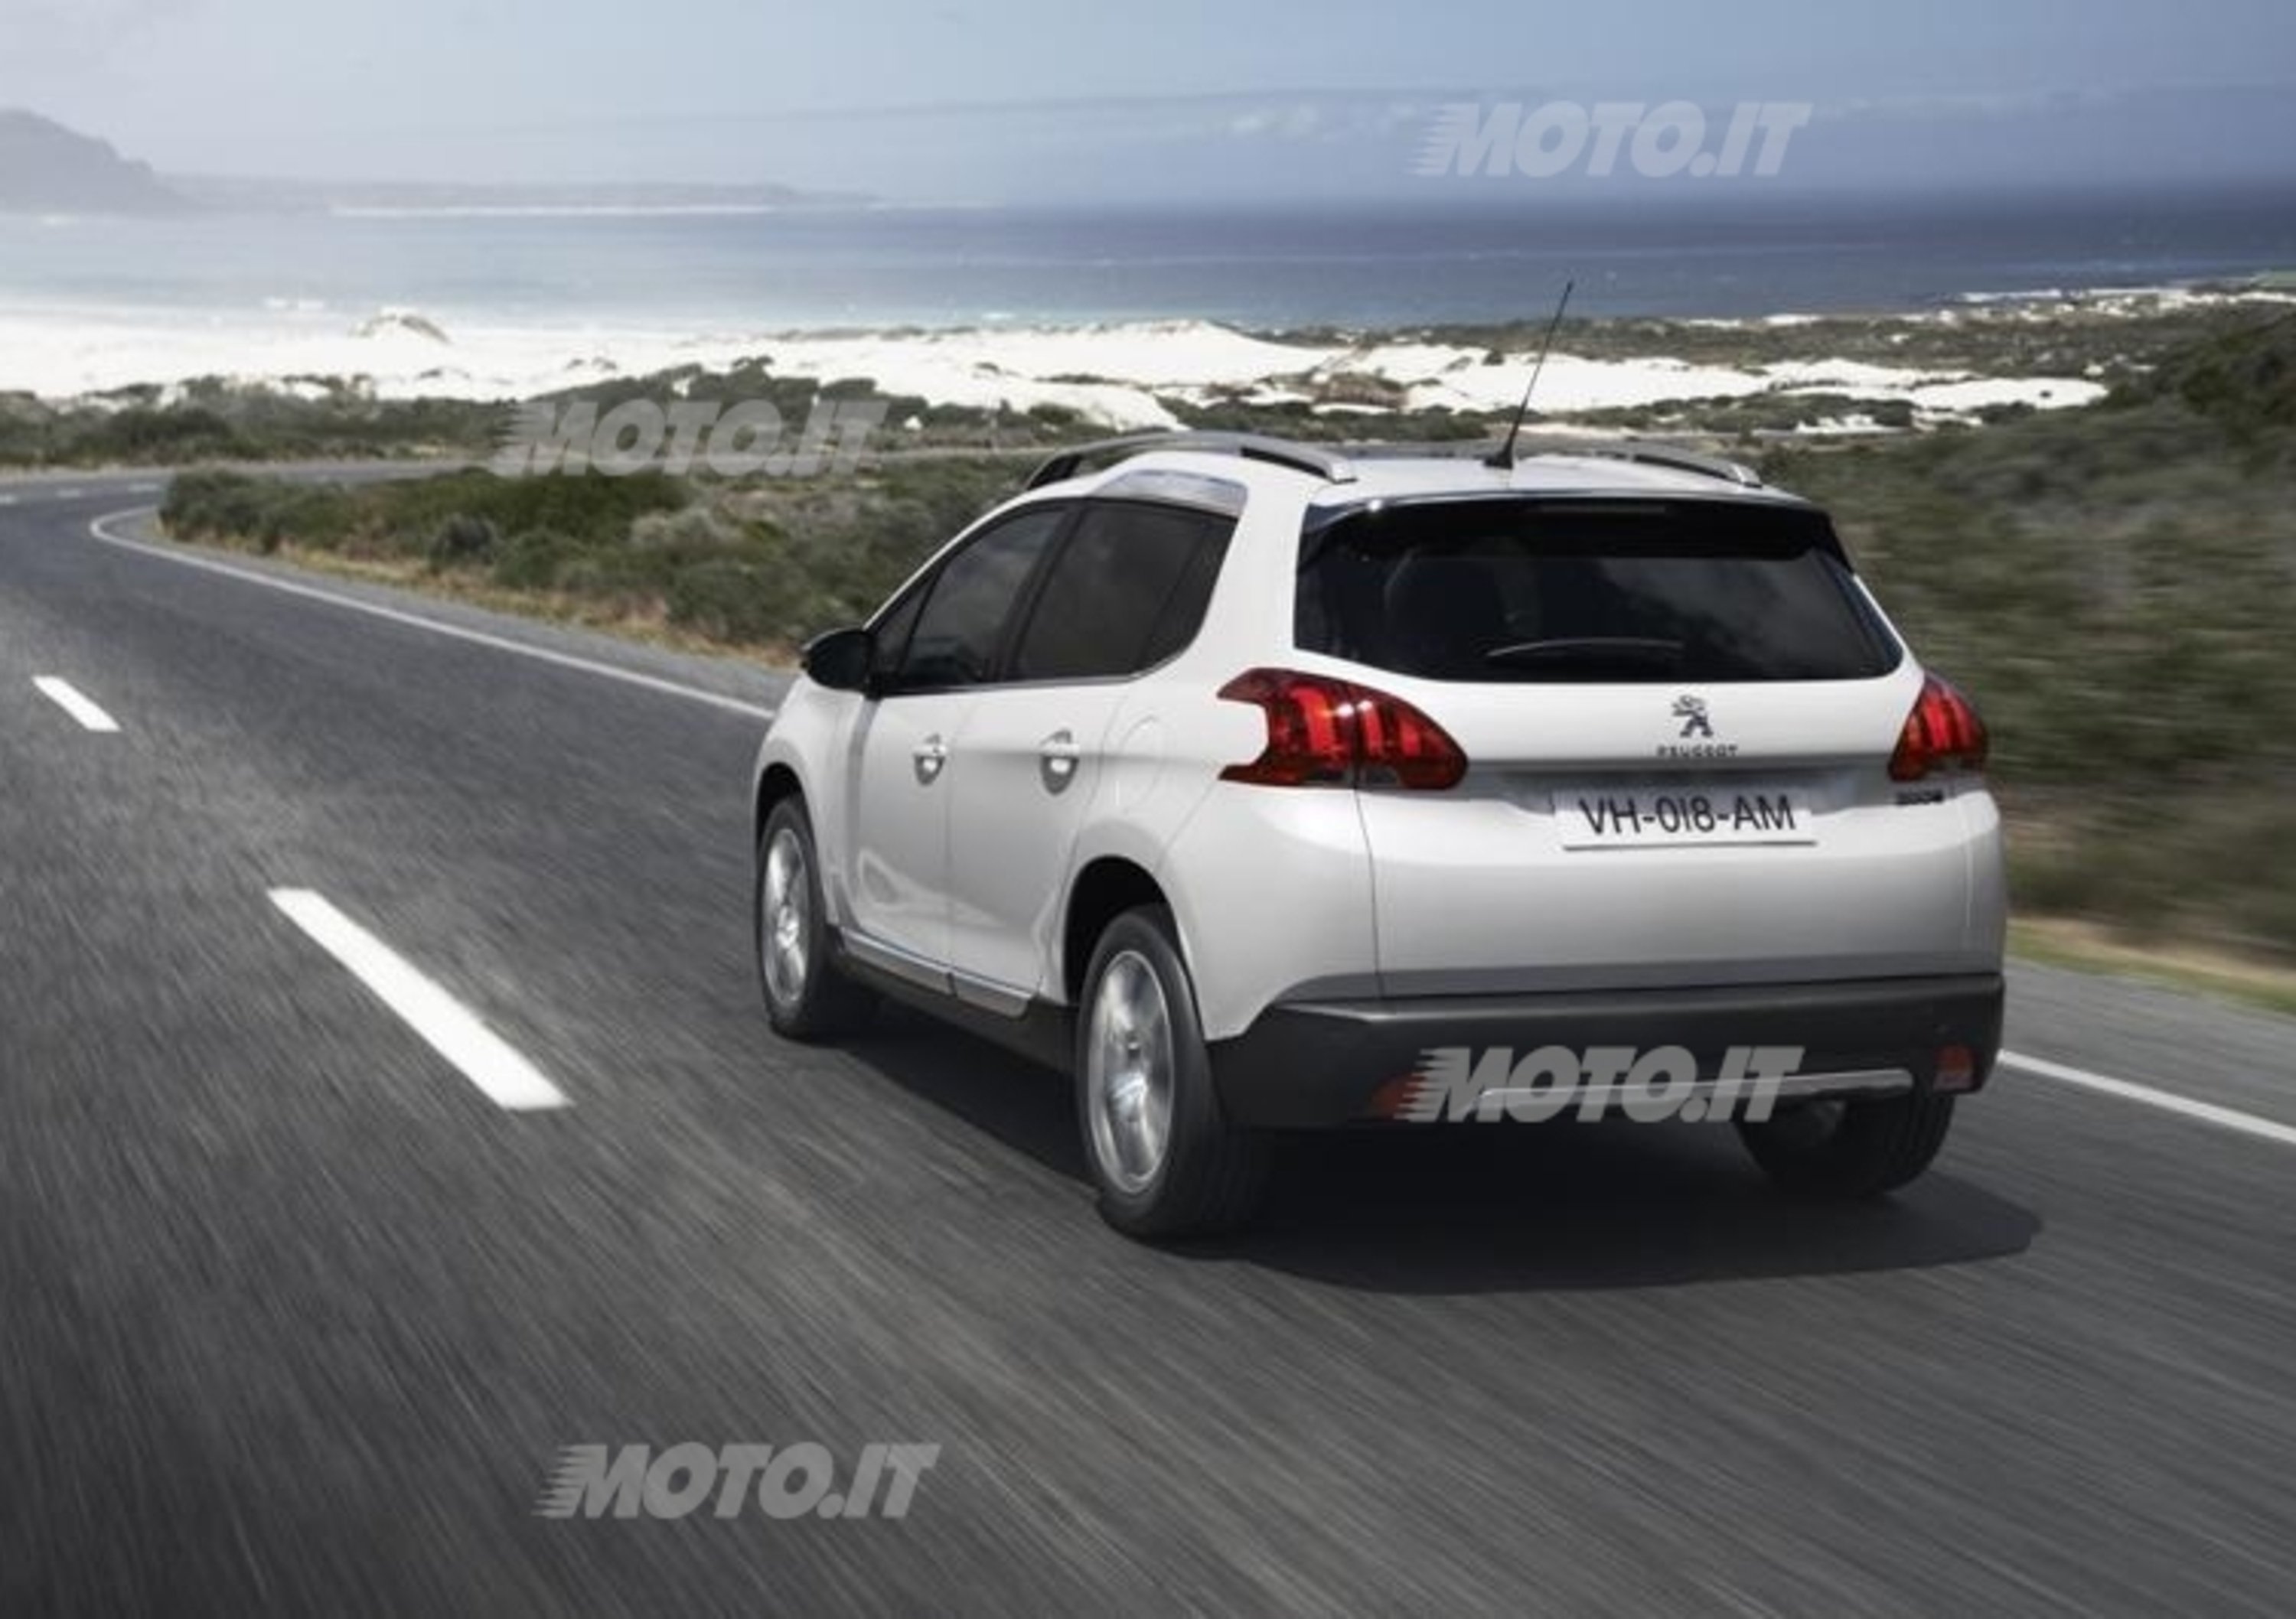 Peugeot 2008 si aggiudica le cinque stelle Euro NCAP